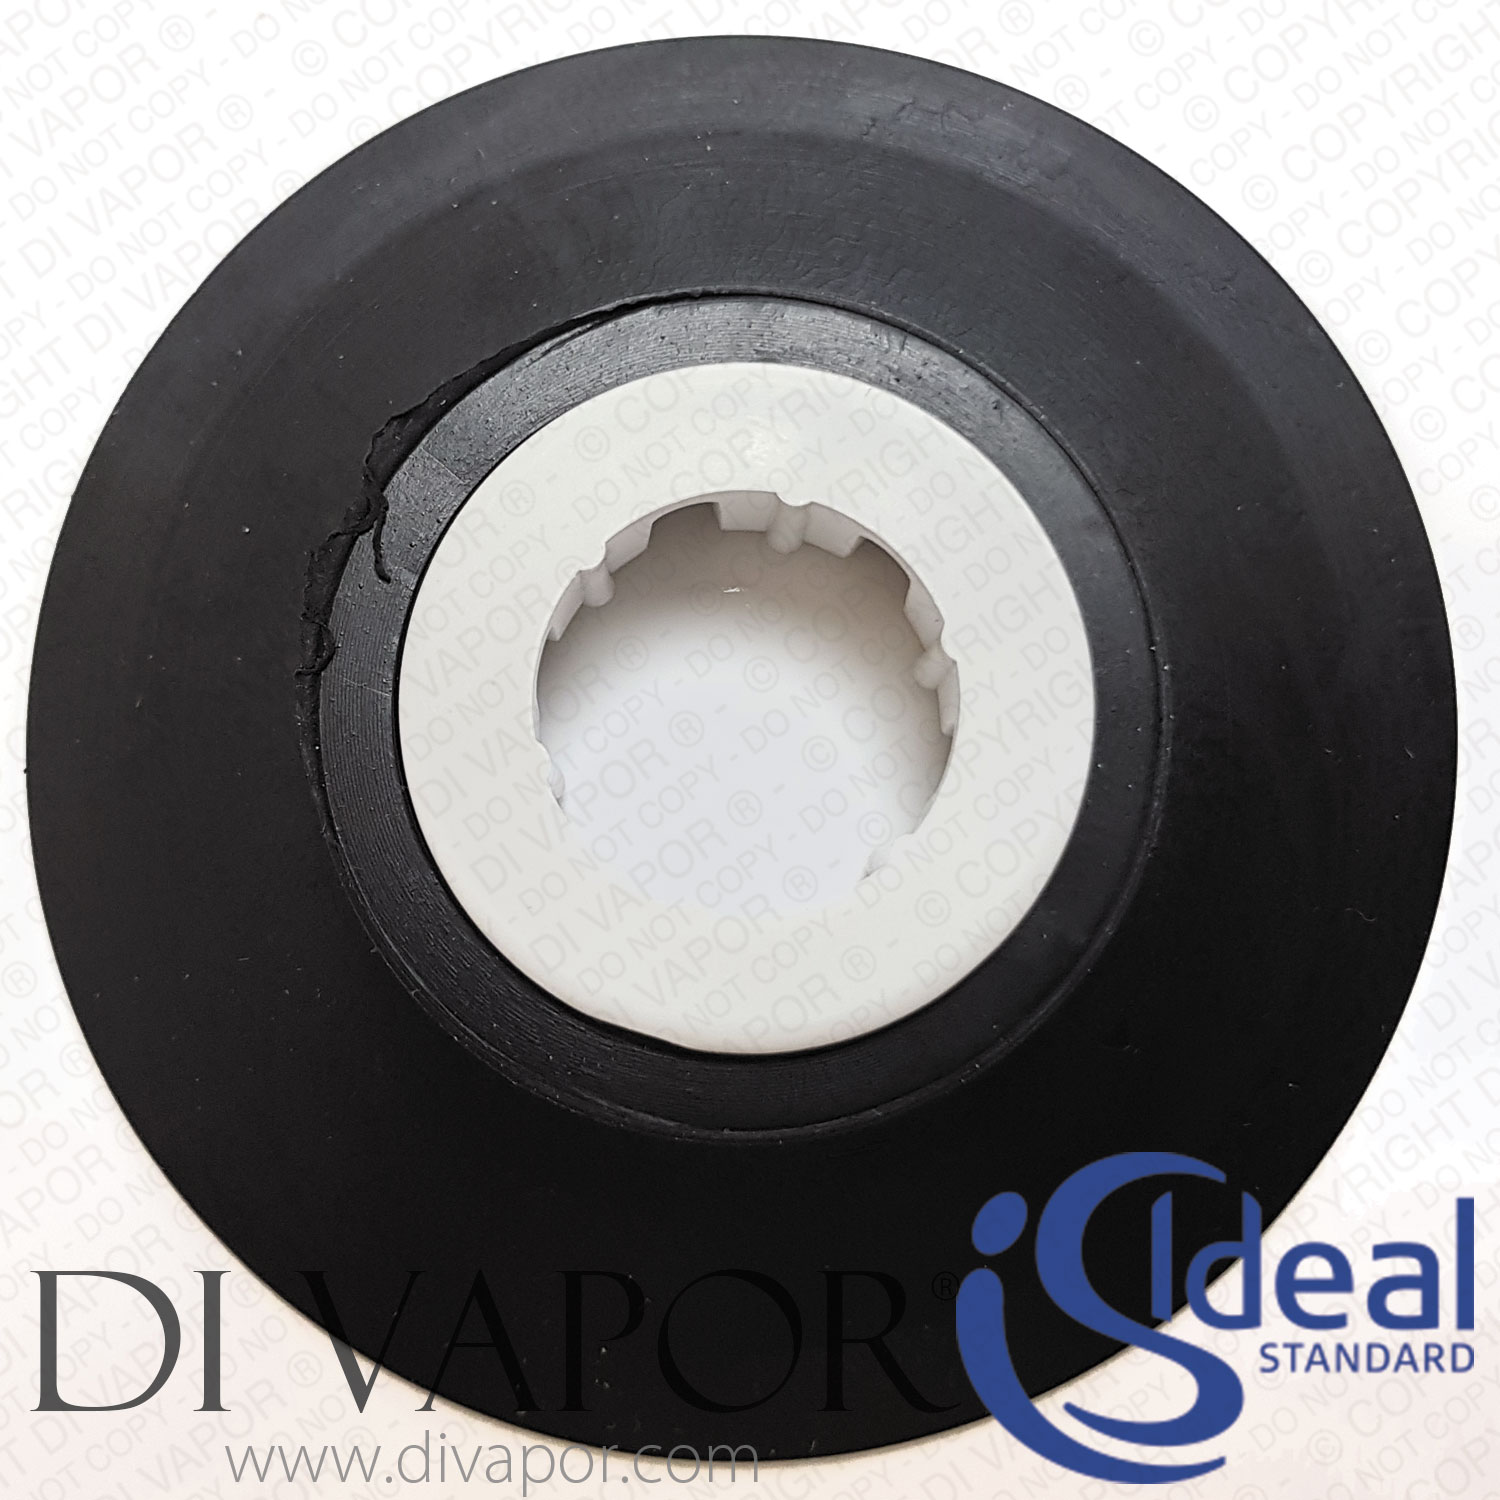 Ideal Standard SV01967 Dual Flushvalve Seal and Clip